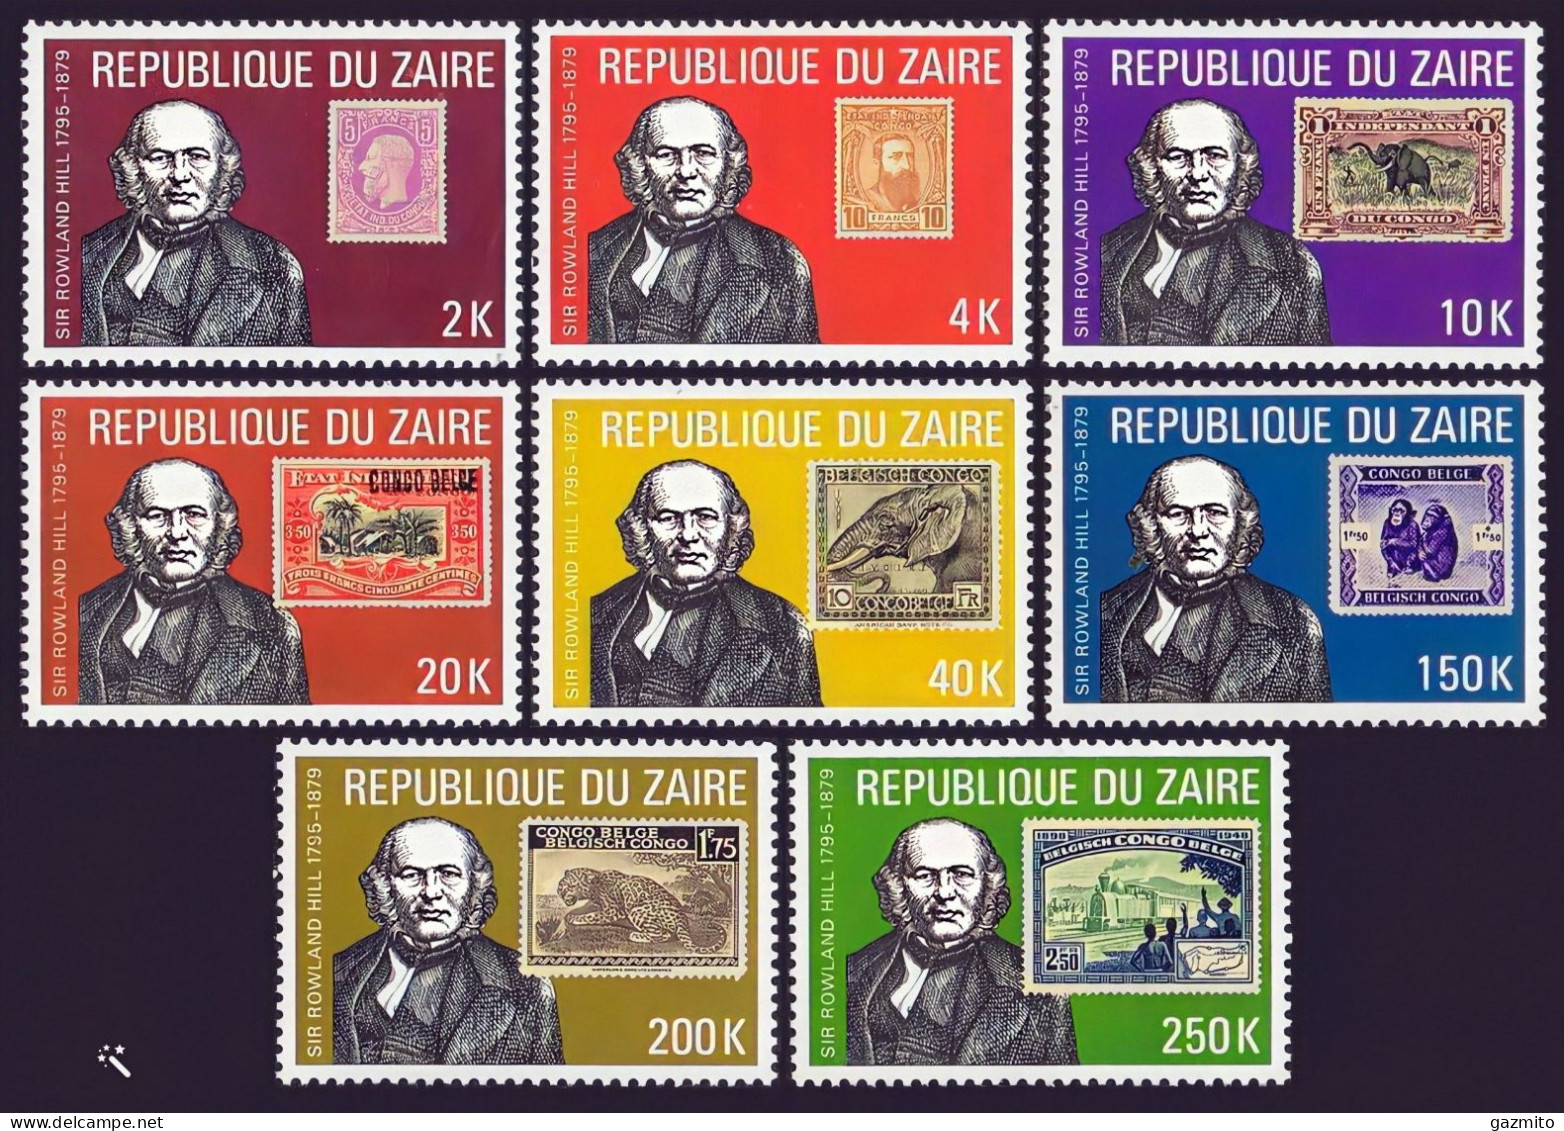 Zaire 1980, Rowland Hill, Stamp On Stamp, Wild Cat, Monkey, Elephant, 8val - Elephants